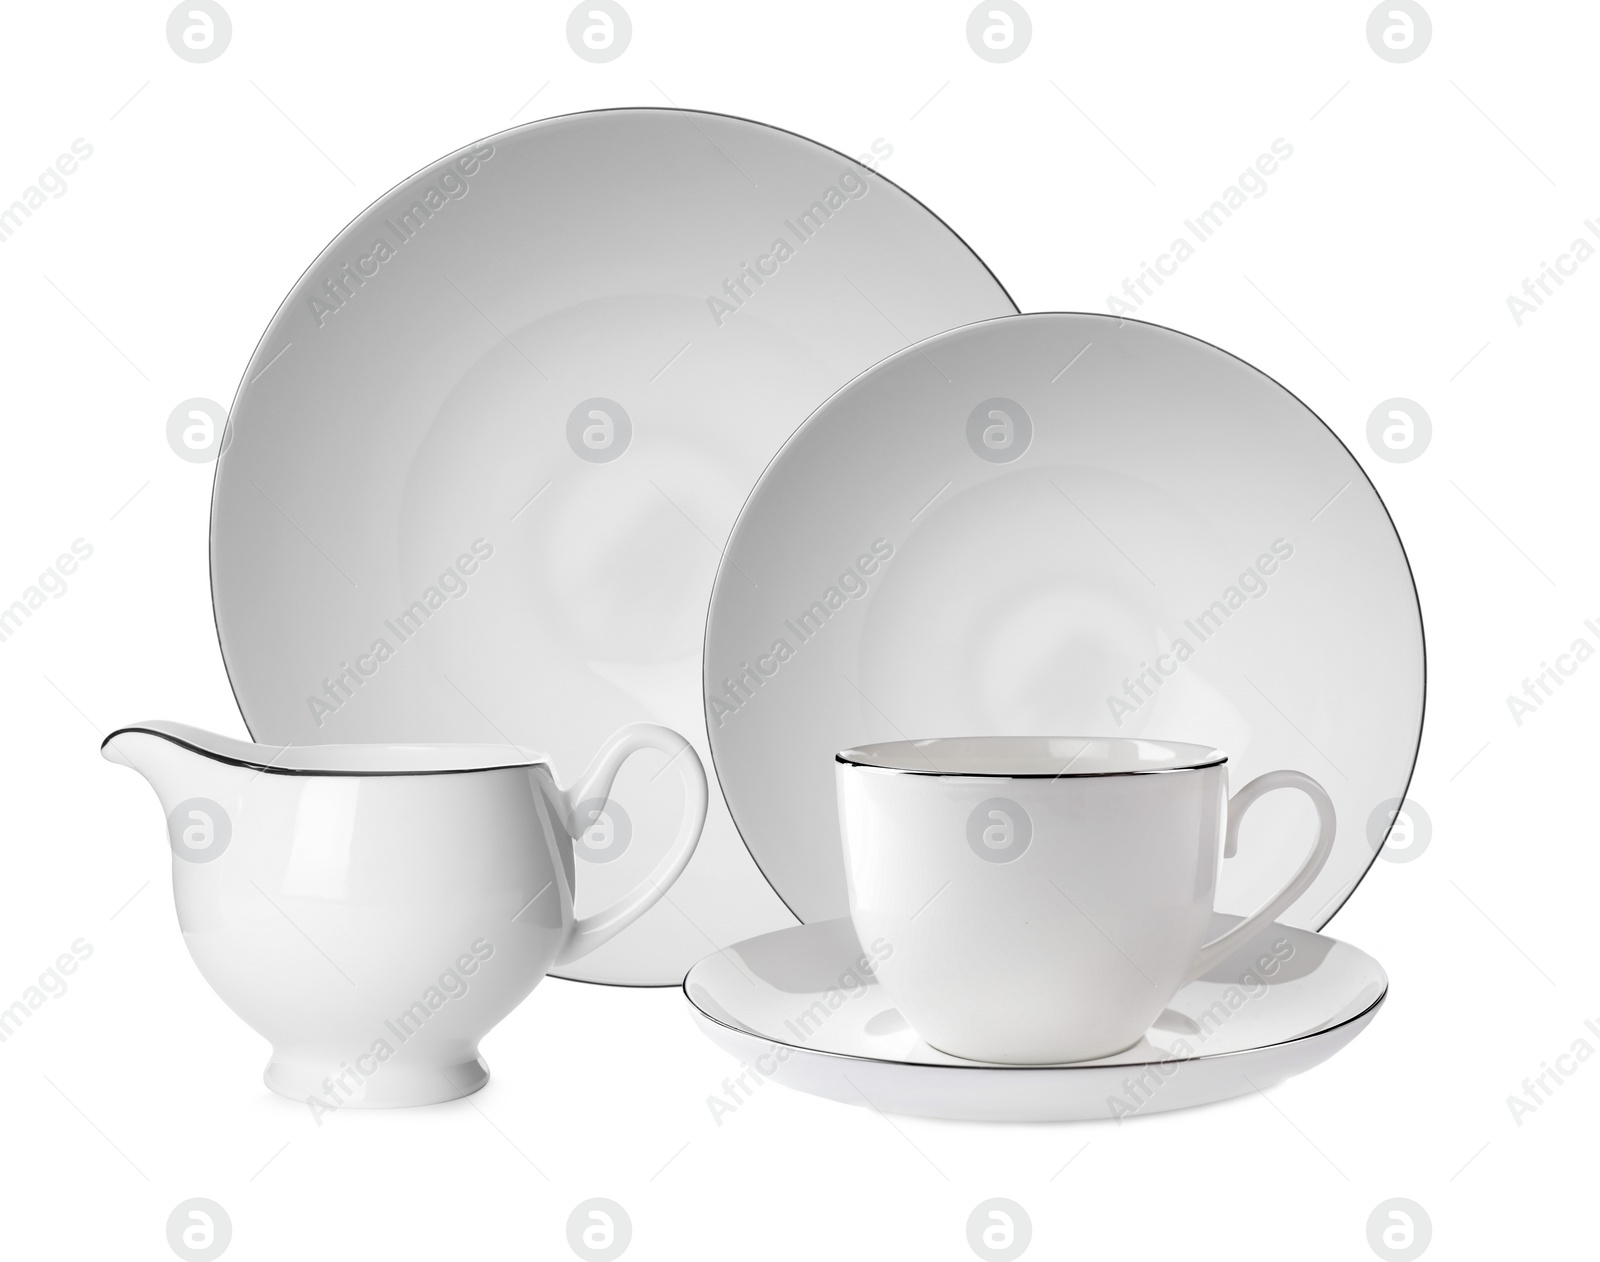 Image of Set of beautiful ceramic dinnerware on white background